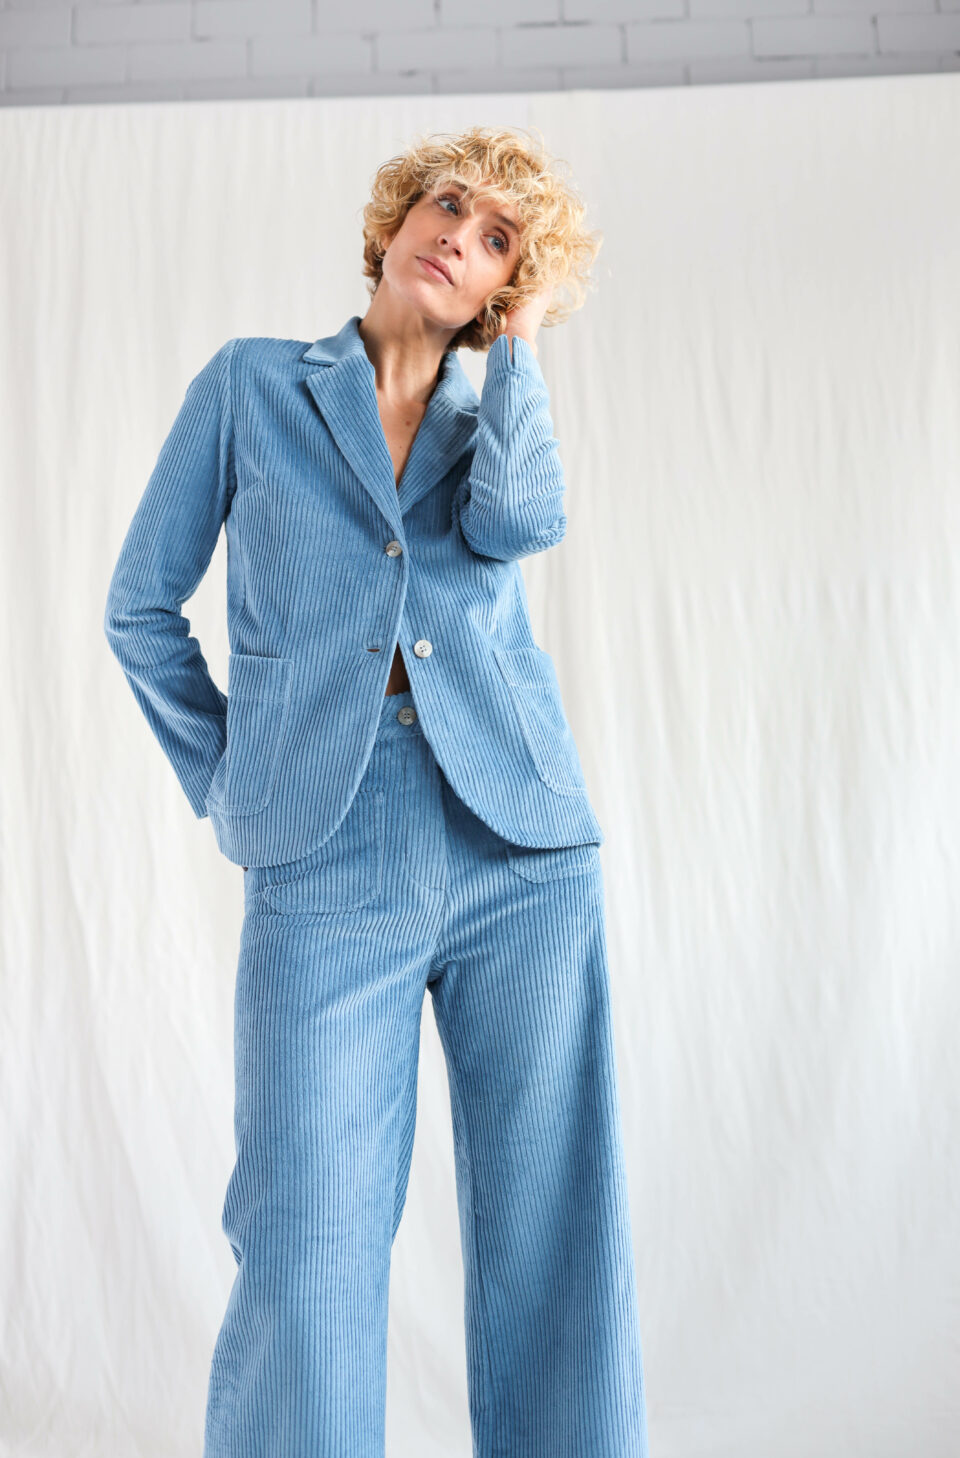 Light blue wide wale corduroy blazer | Jackets | Light Blue | Sustainable clothing | OffOn clothing